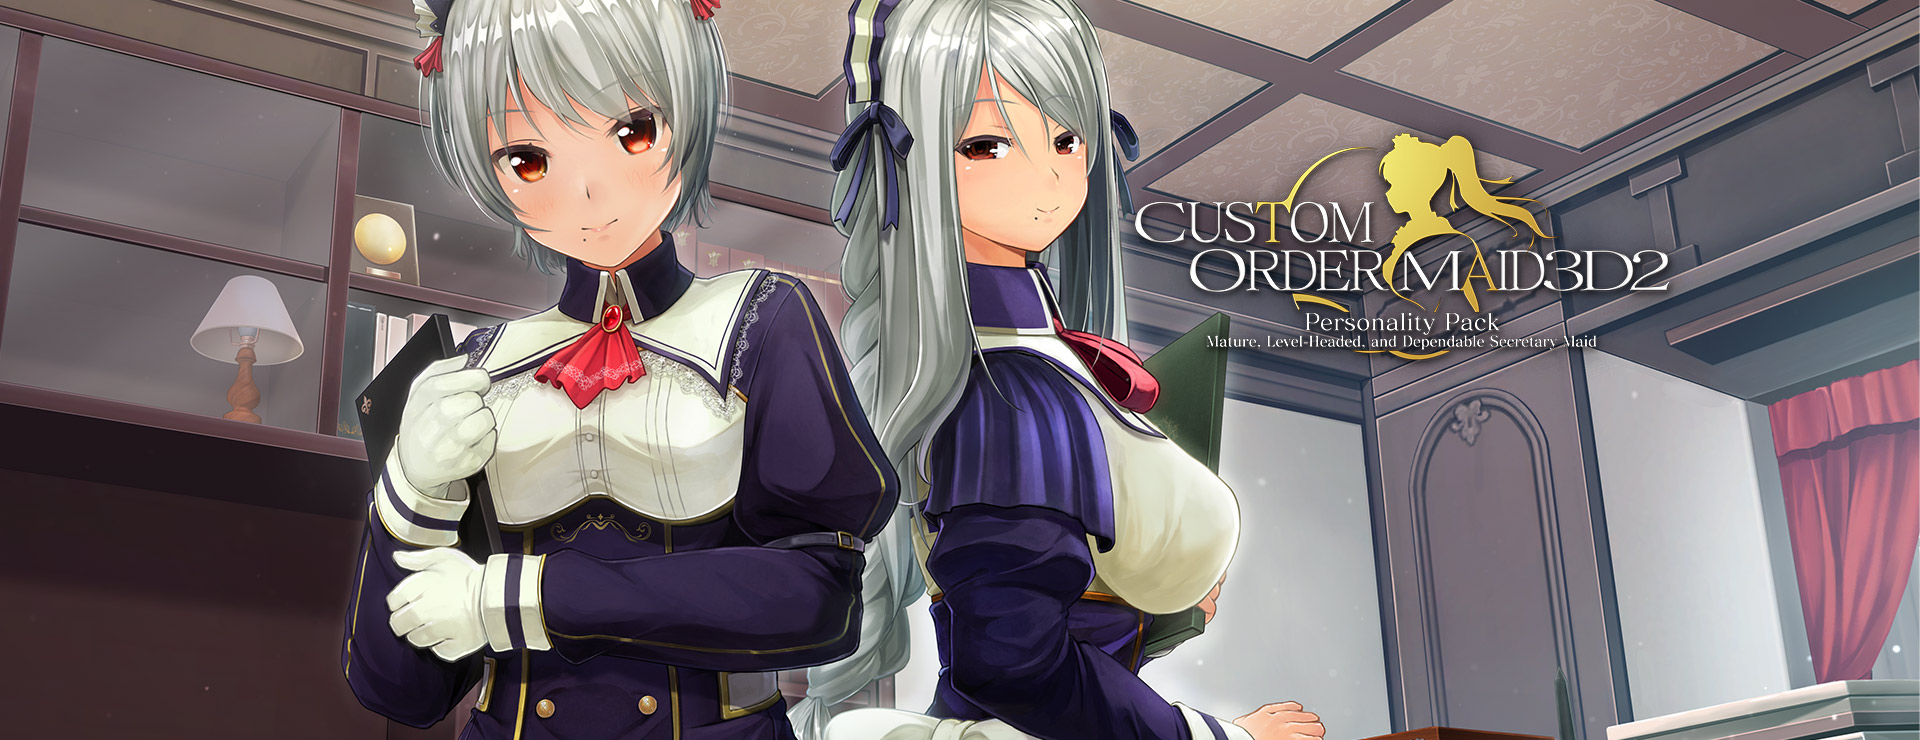 Custom Order Maid 3D 2 - Mature, Level-Headed, and Dependable Secretary Maid DLC - シミュレーション ゲーム